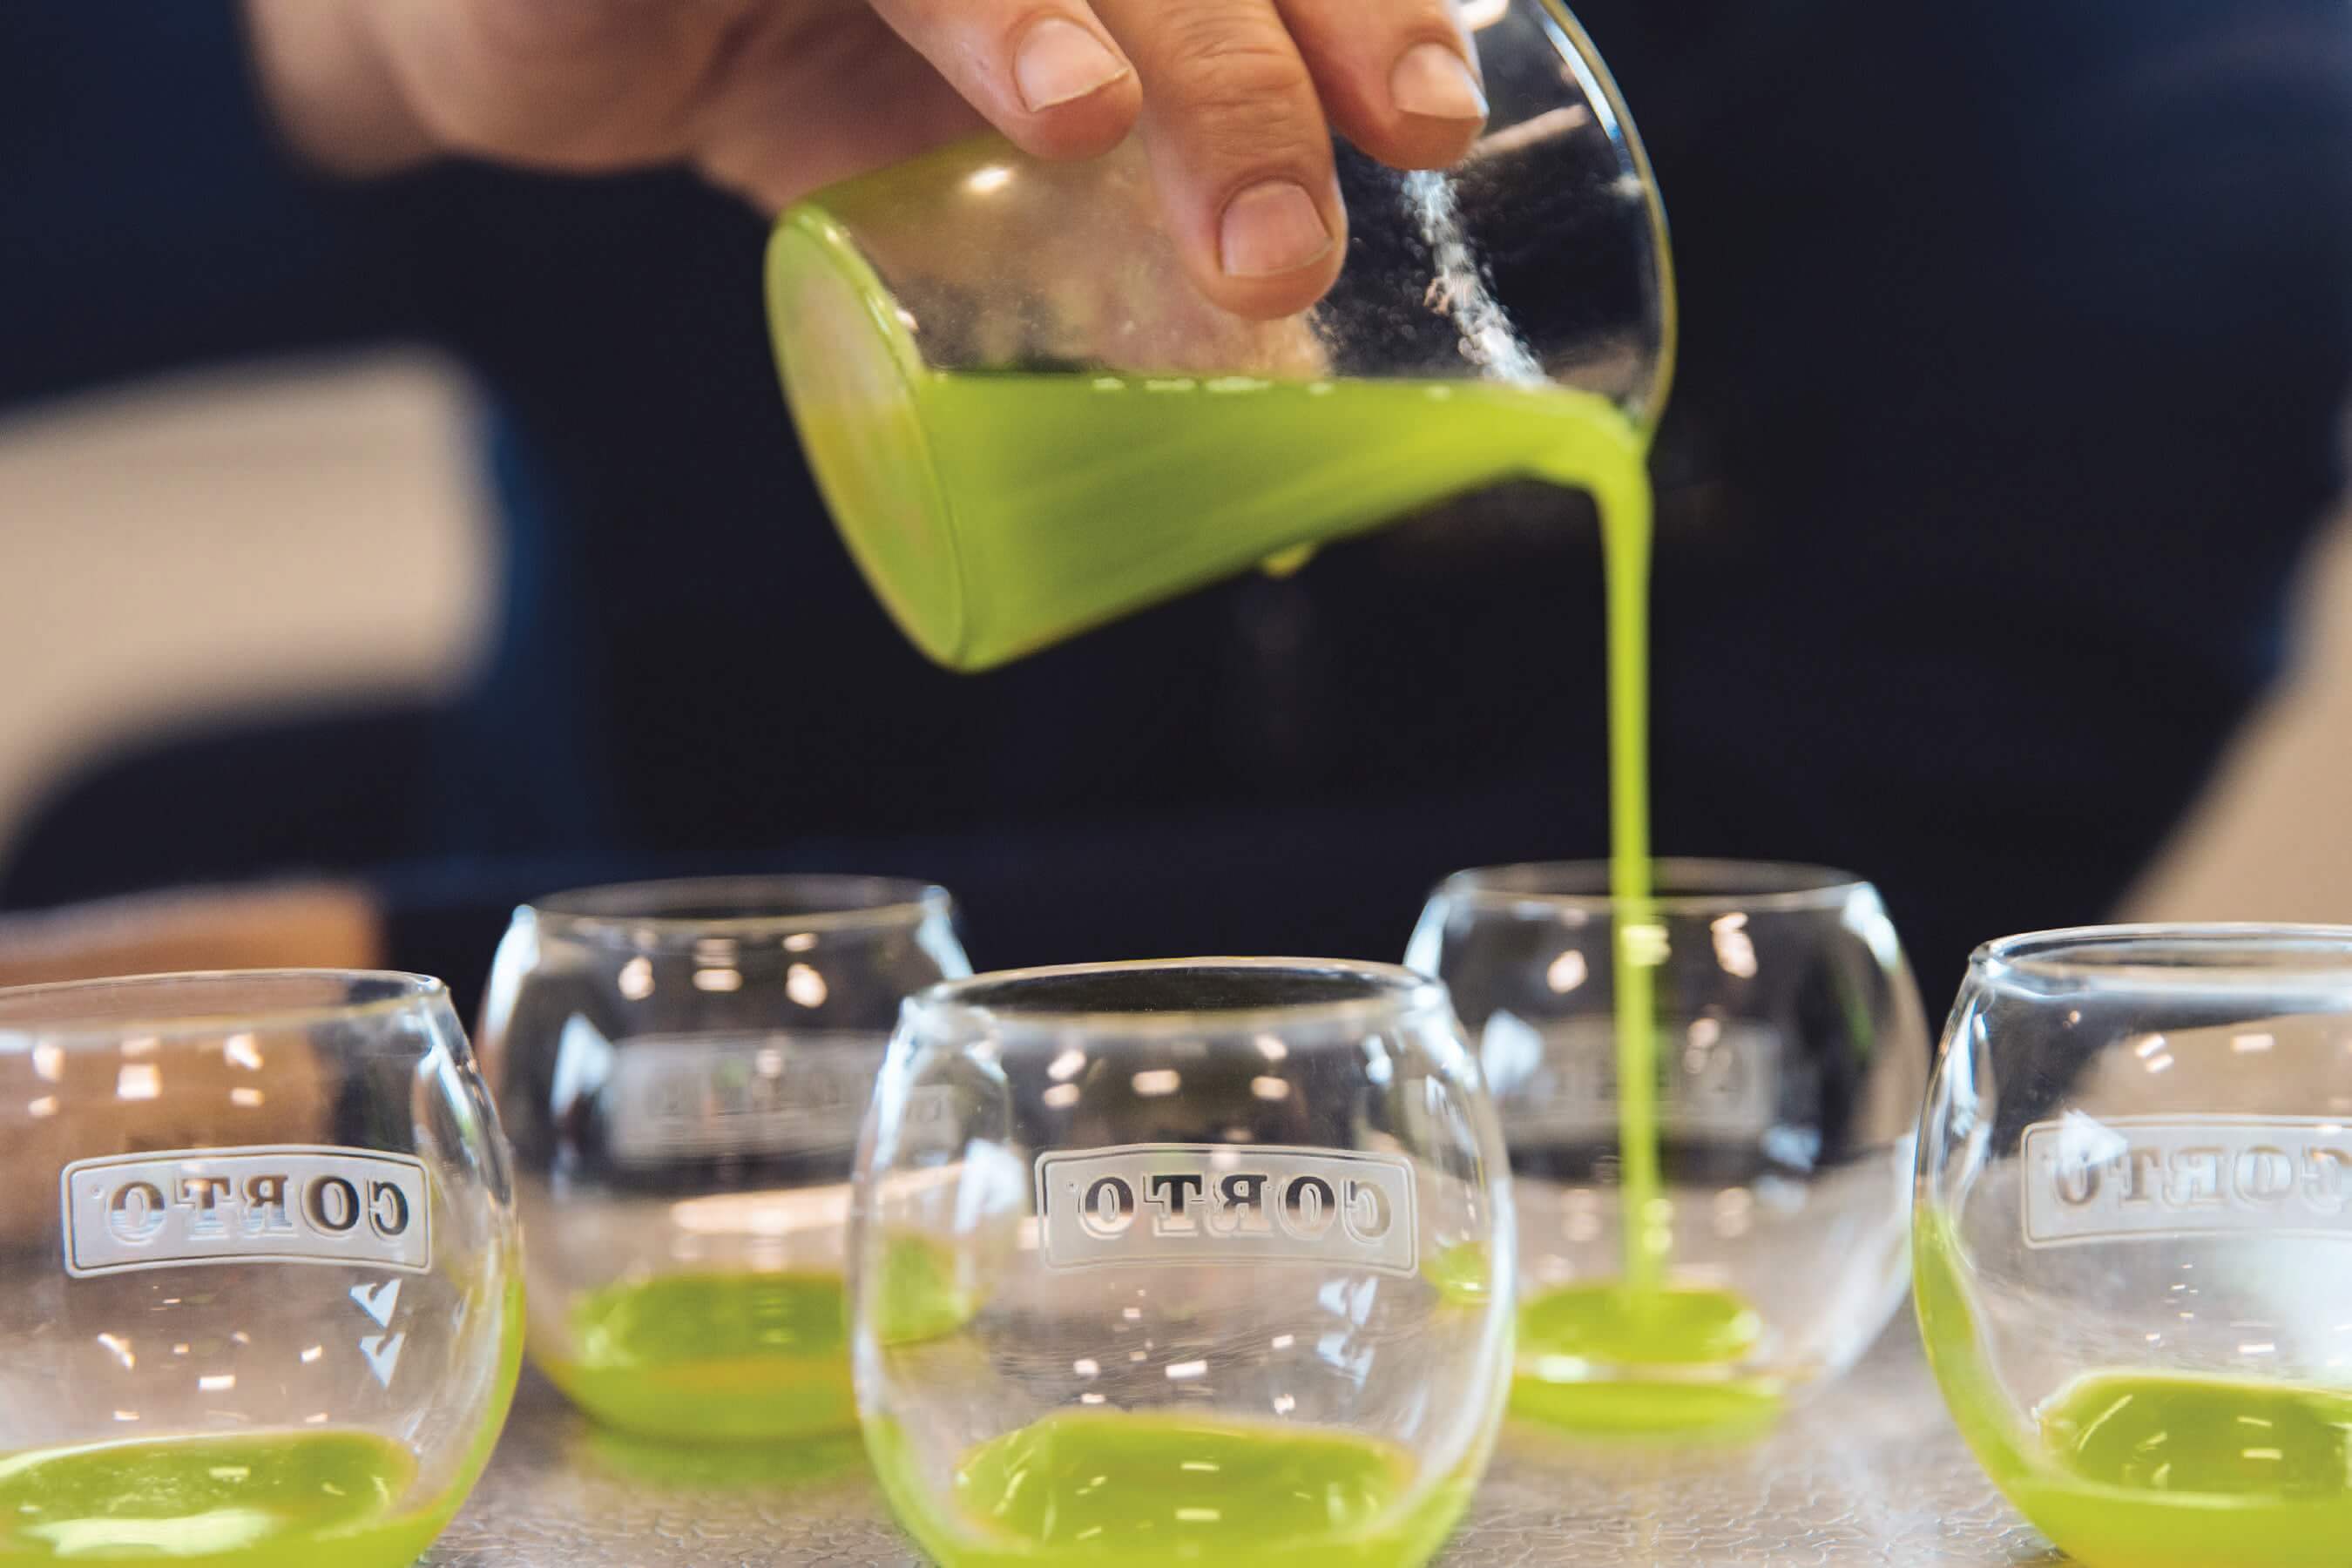 Hand pouring bright green liquid